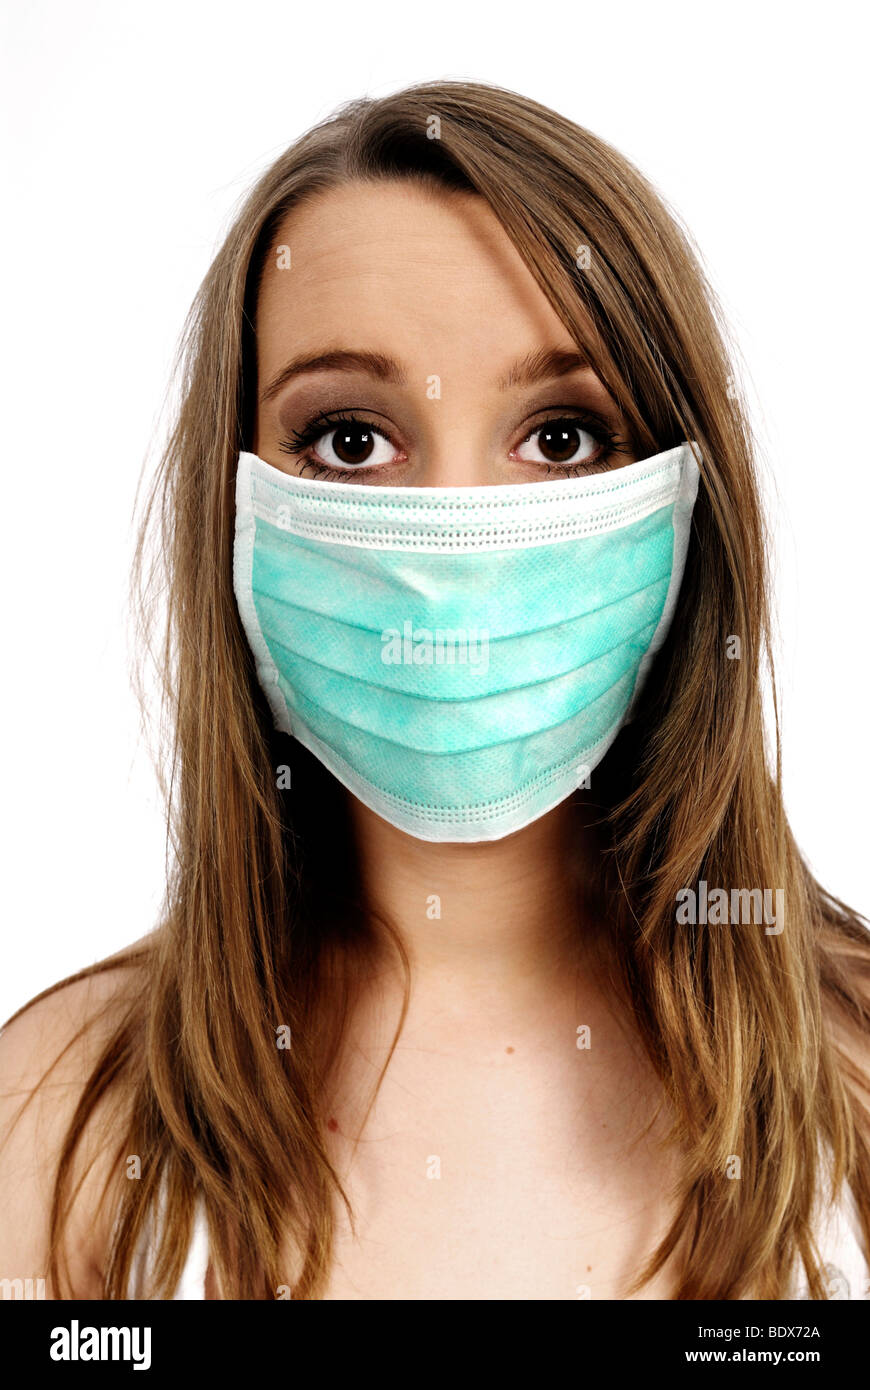 Woman with face mask, swine flu, flu viruses Stock Photo